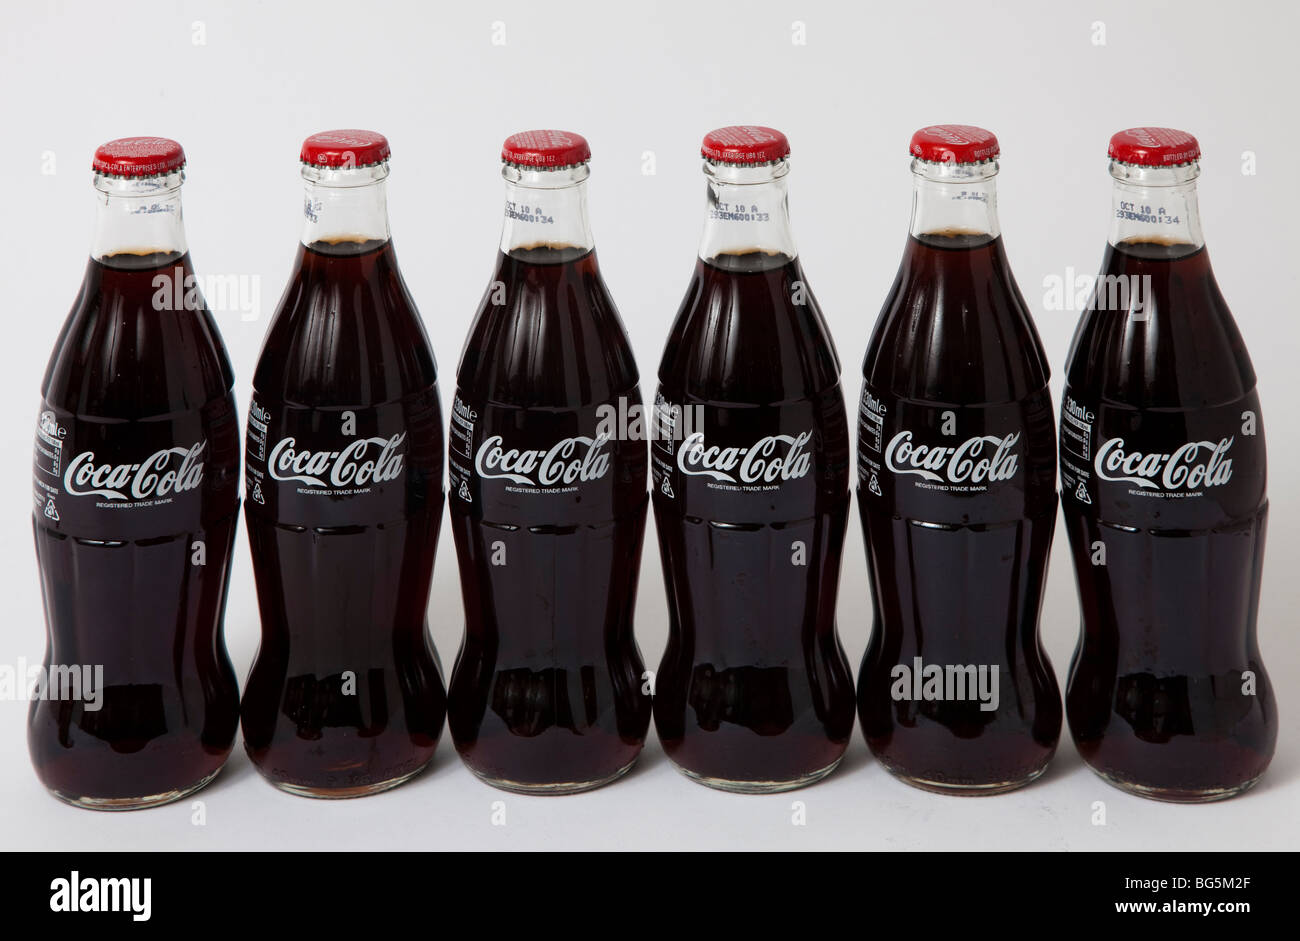 coca cola coke bottles bottle glass Stock Photo